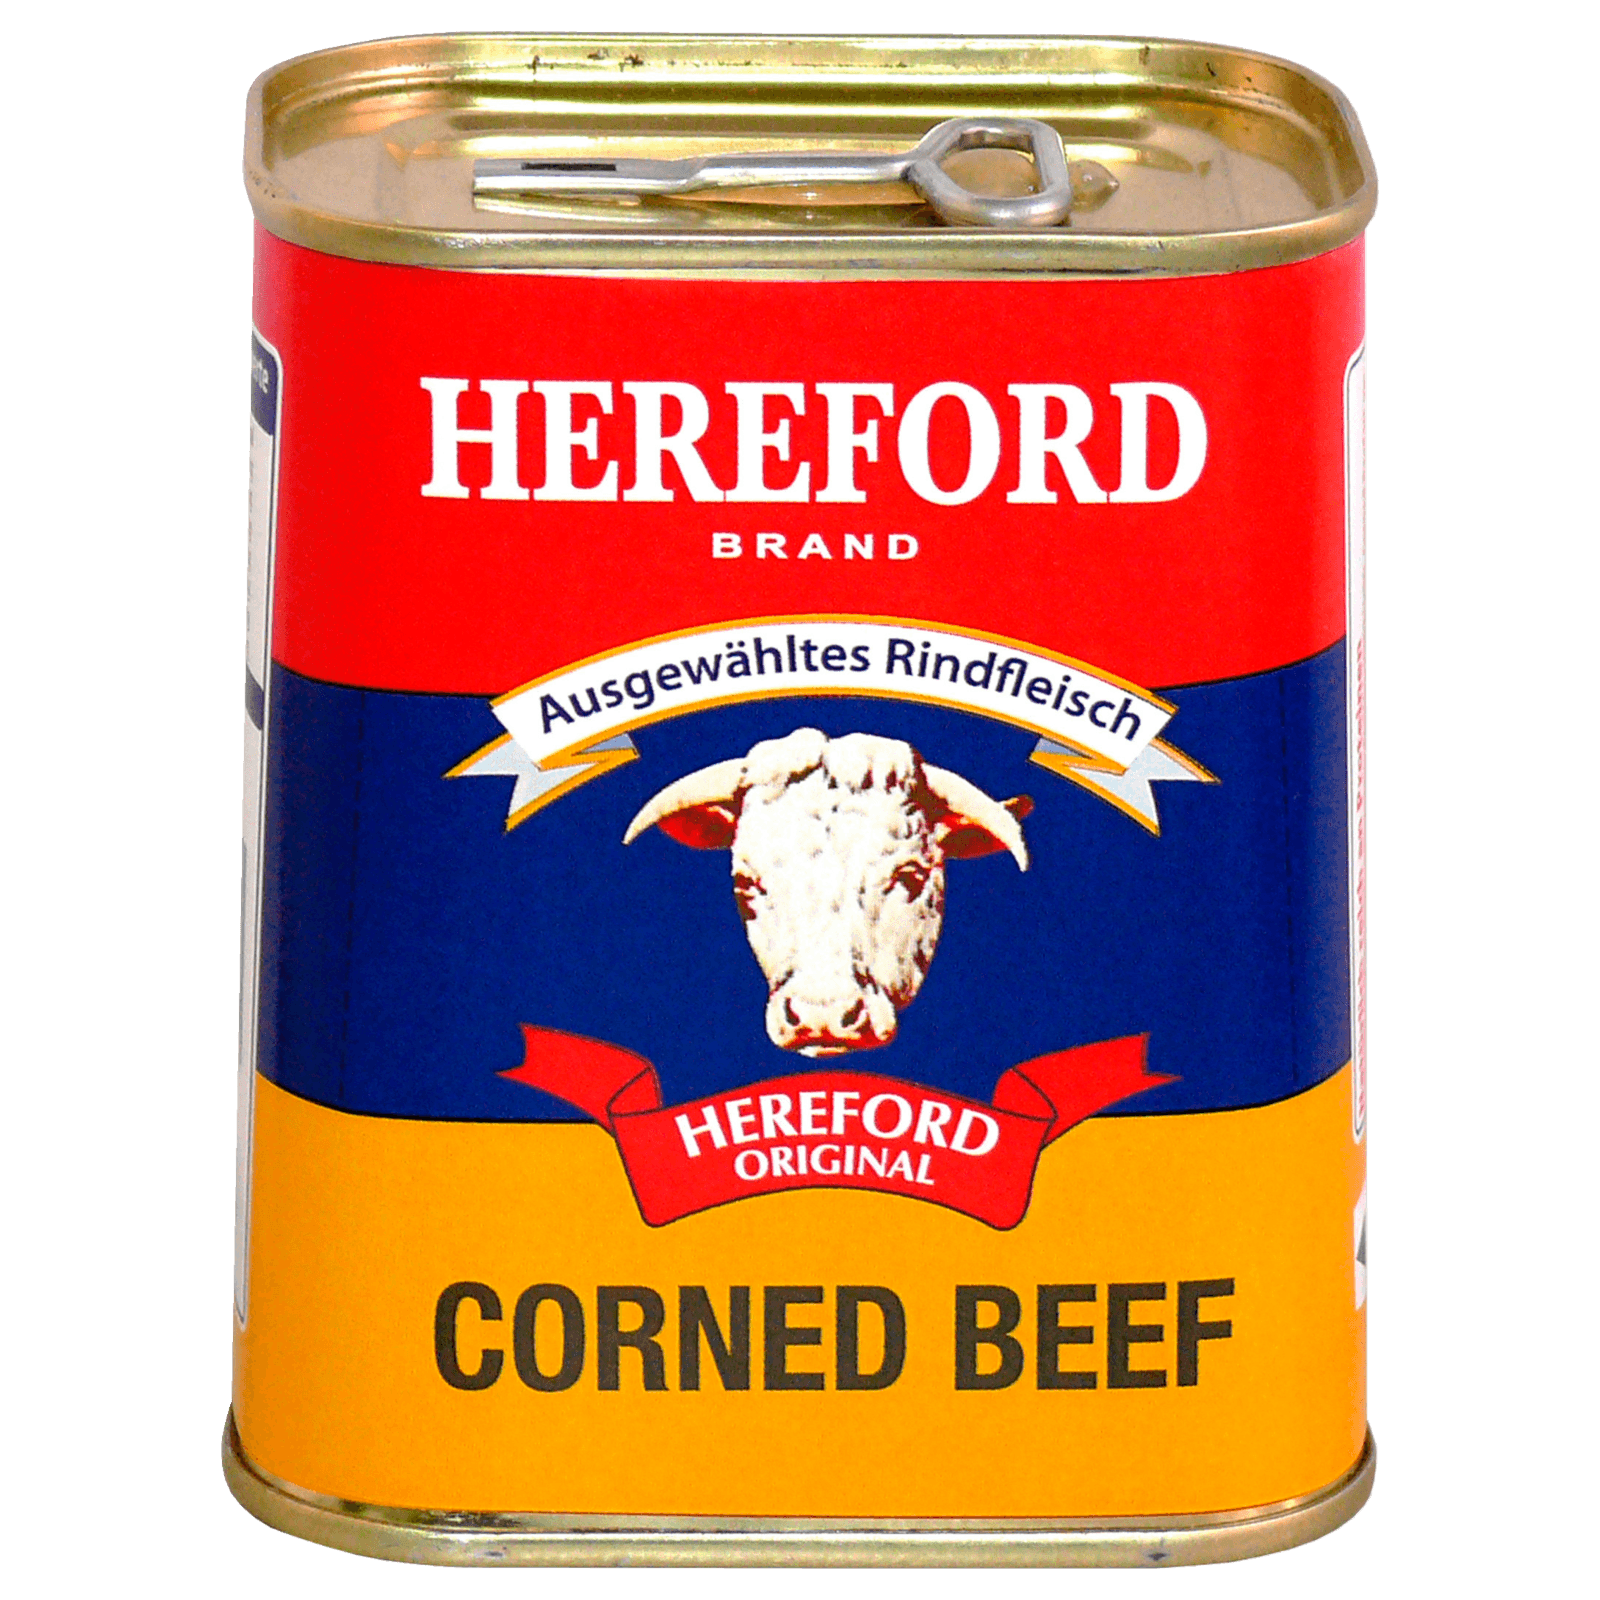 Hereford Corned Beef 10g bei REWE online bestellen!